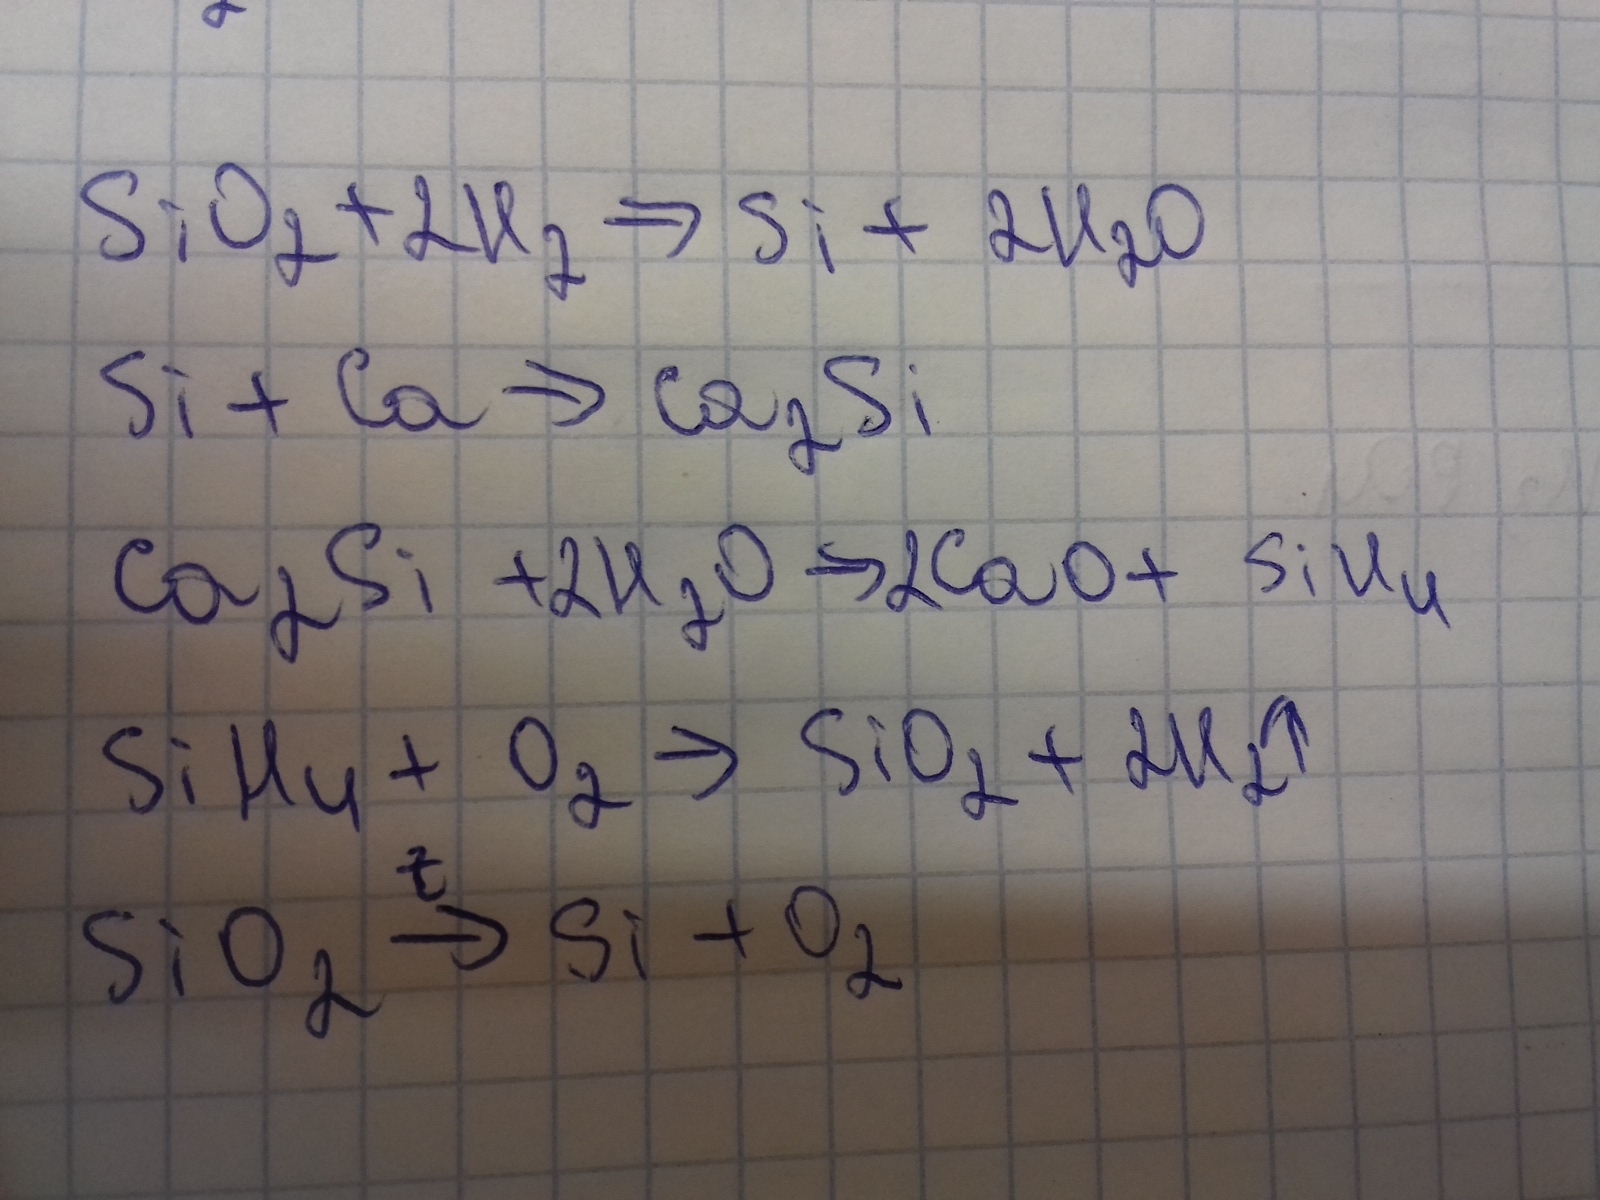 Mg2si sih4 sio2 na2sio3 h2sio3. CA si ca2si ОВР. CA+si уравнение. Sio2 ca2si. Sio2 si ca2si sih4 sio2.